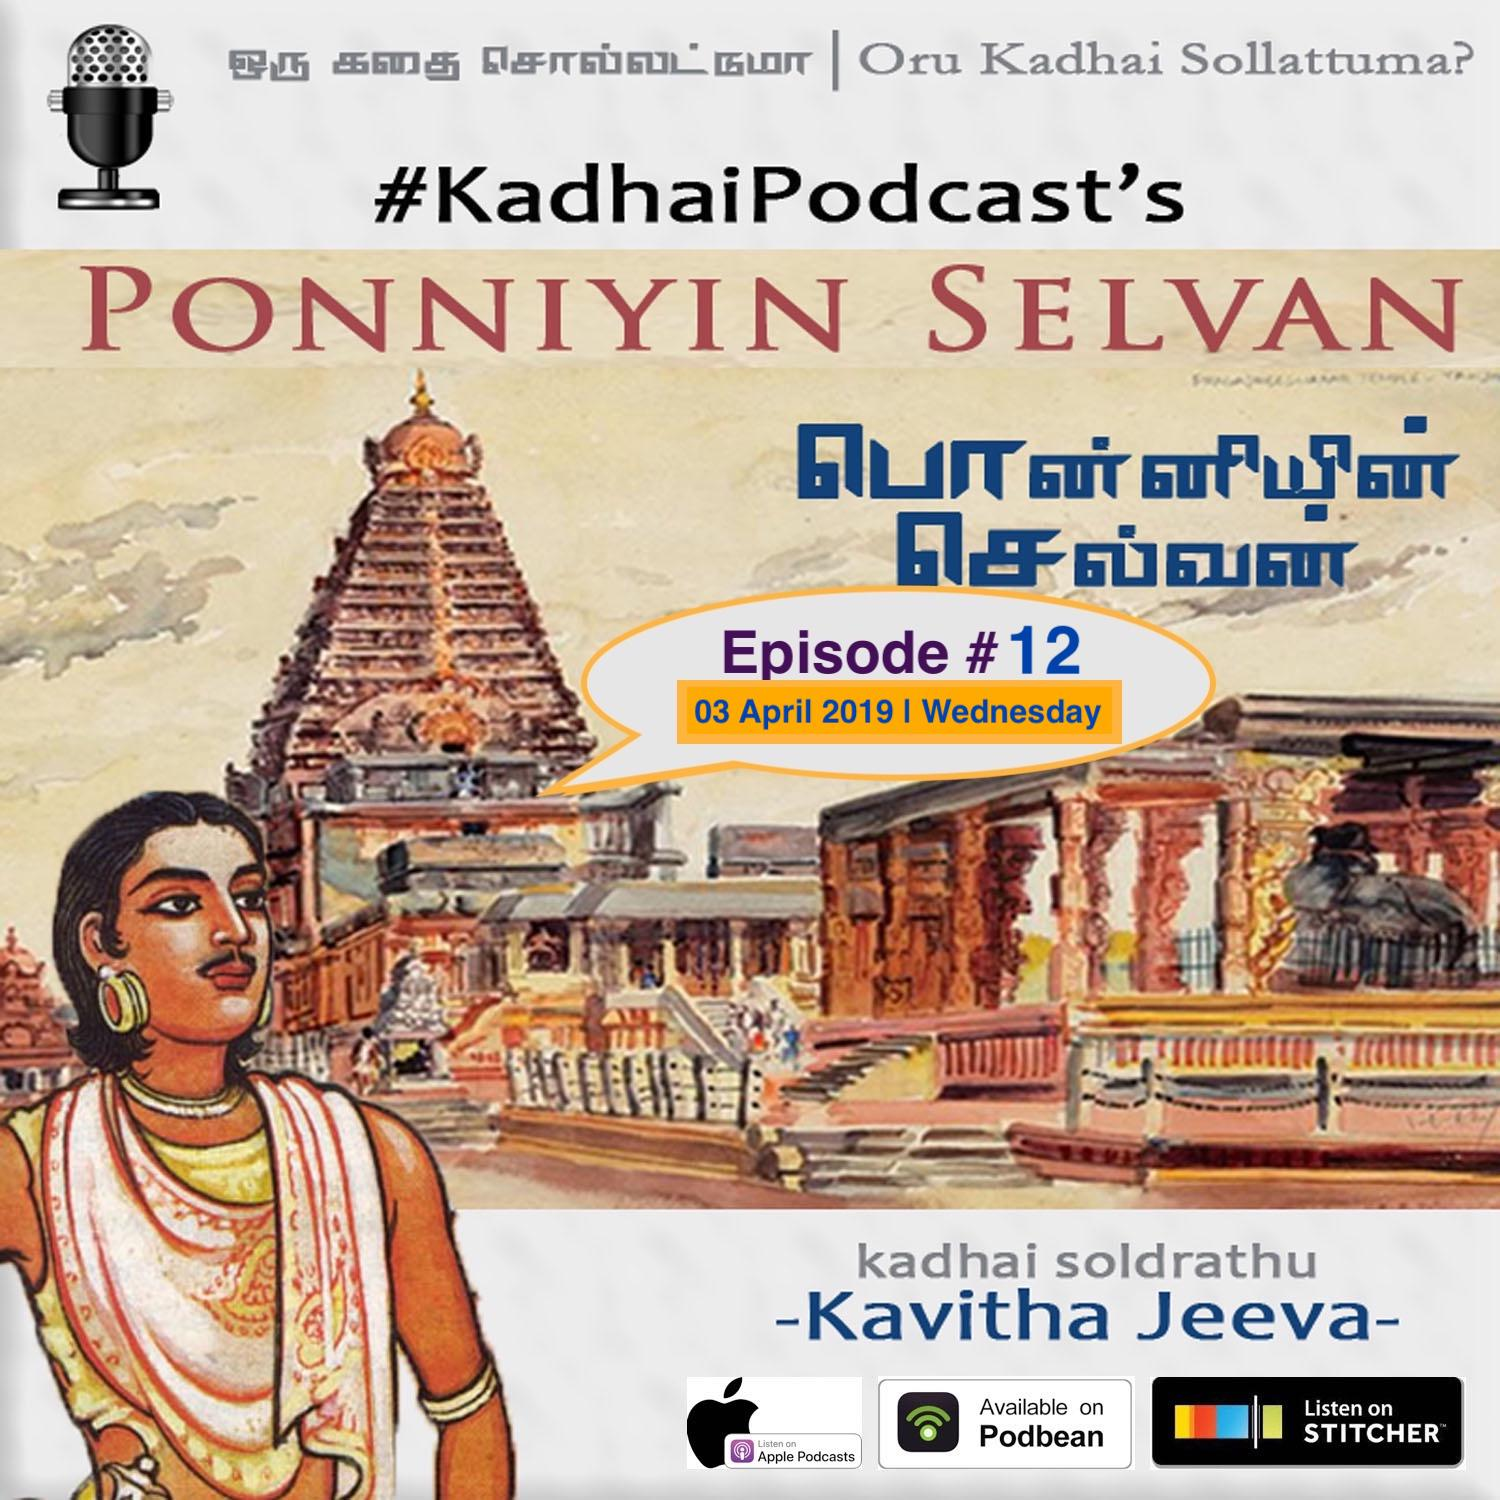 KadhaiPodcast's Ponniyin Selvan - Episode # 12